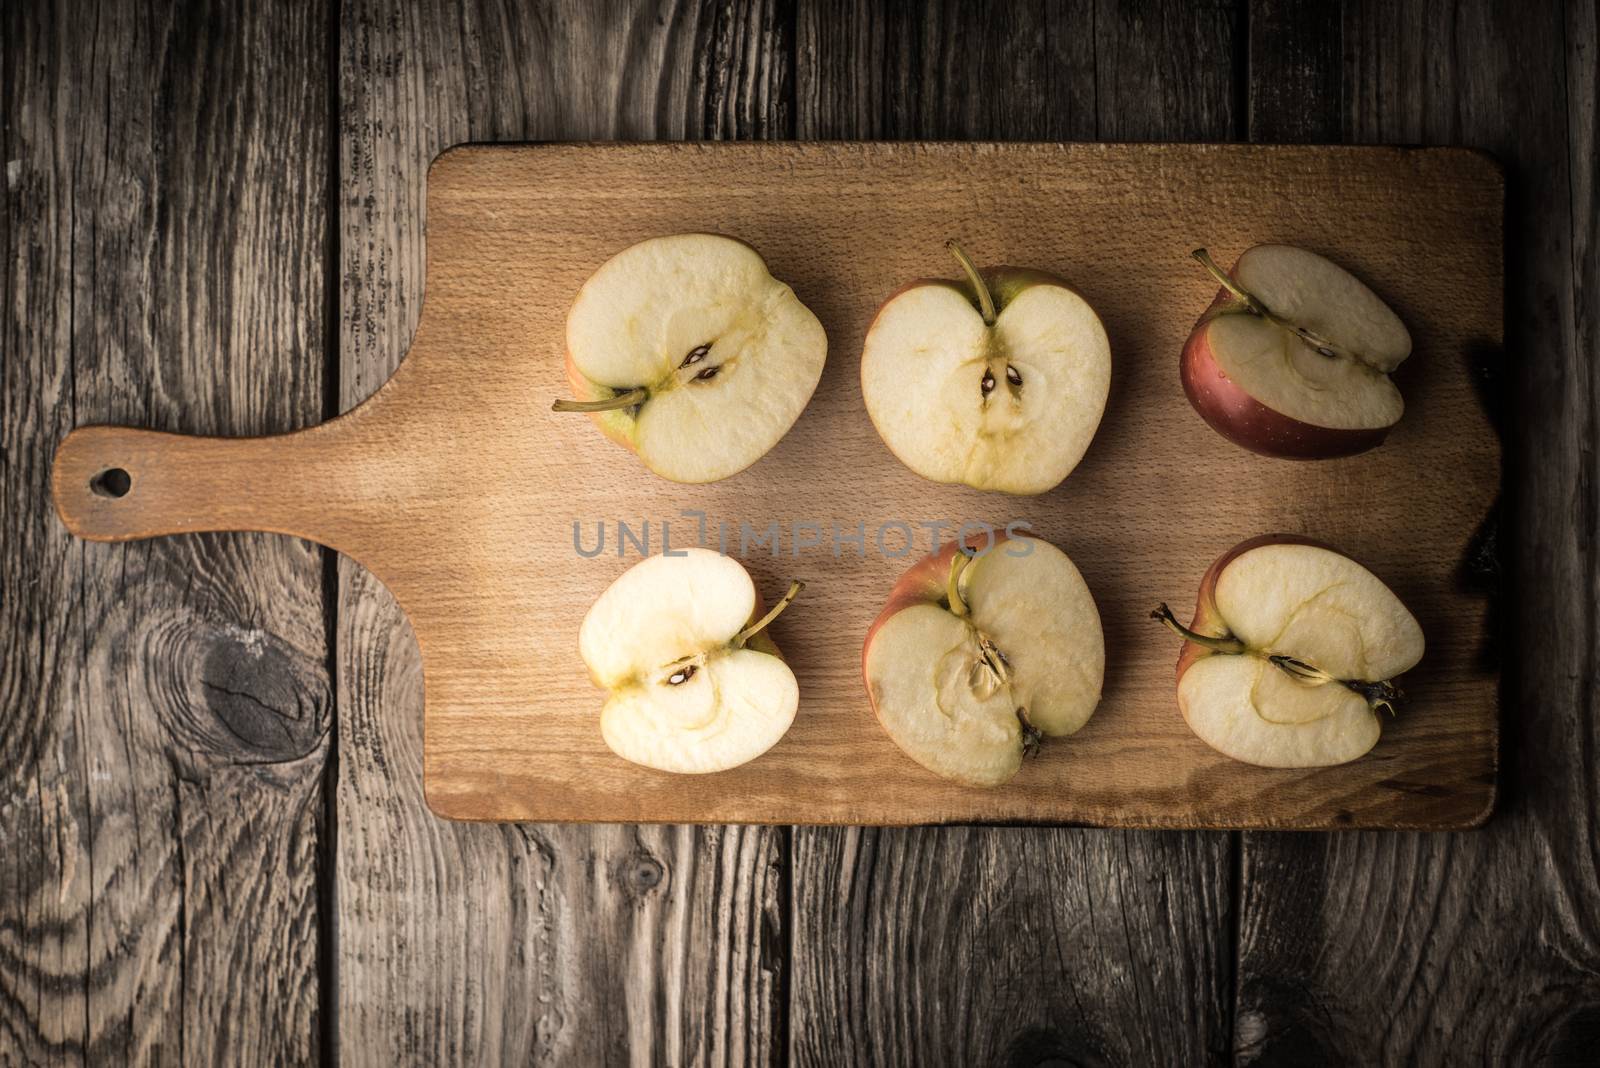 Apple halves on a cutting board horizontal